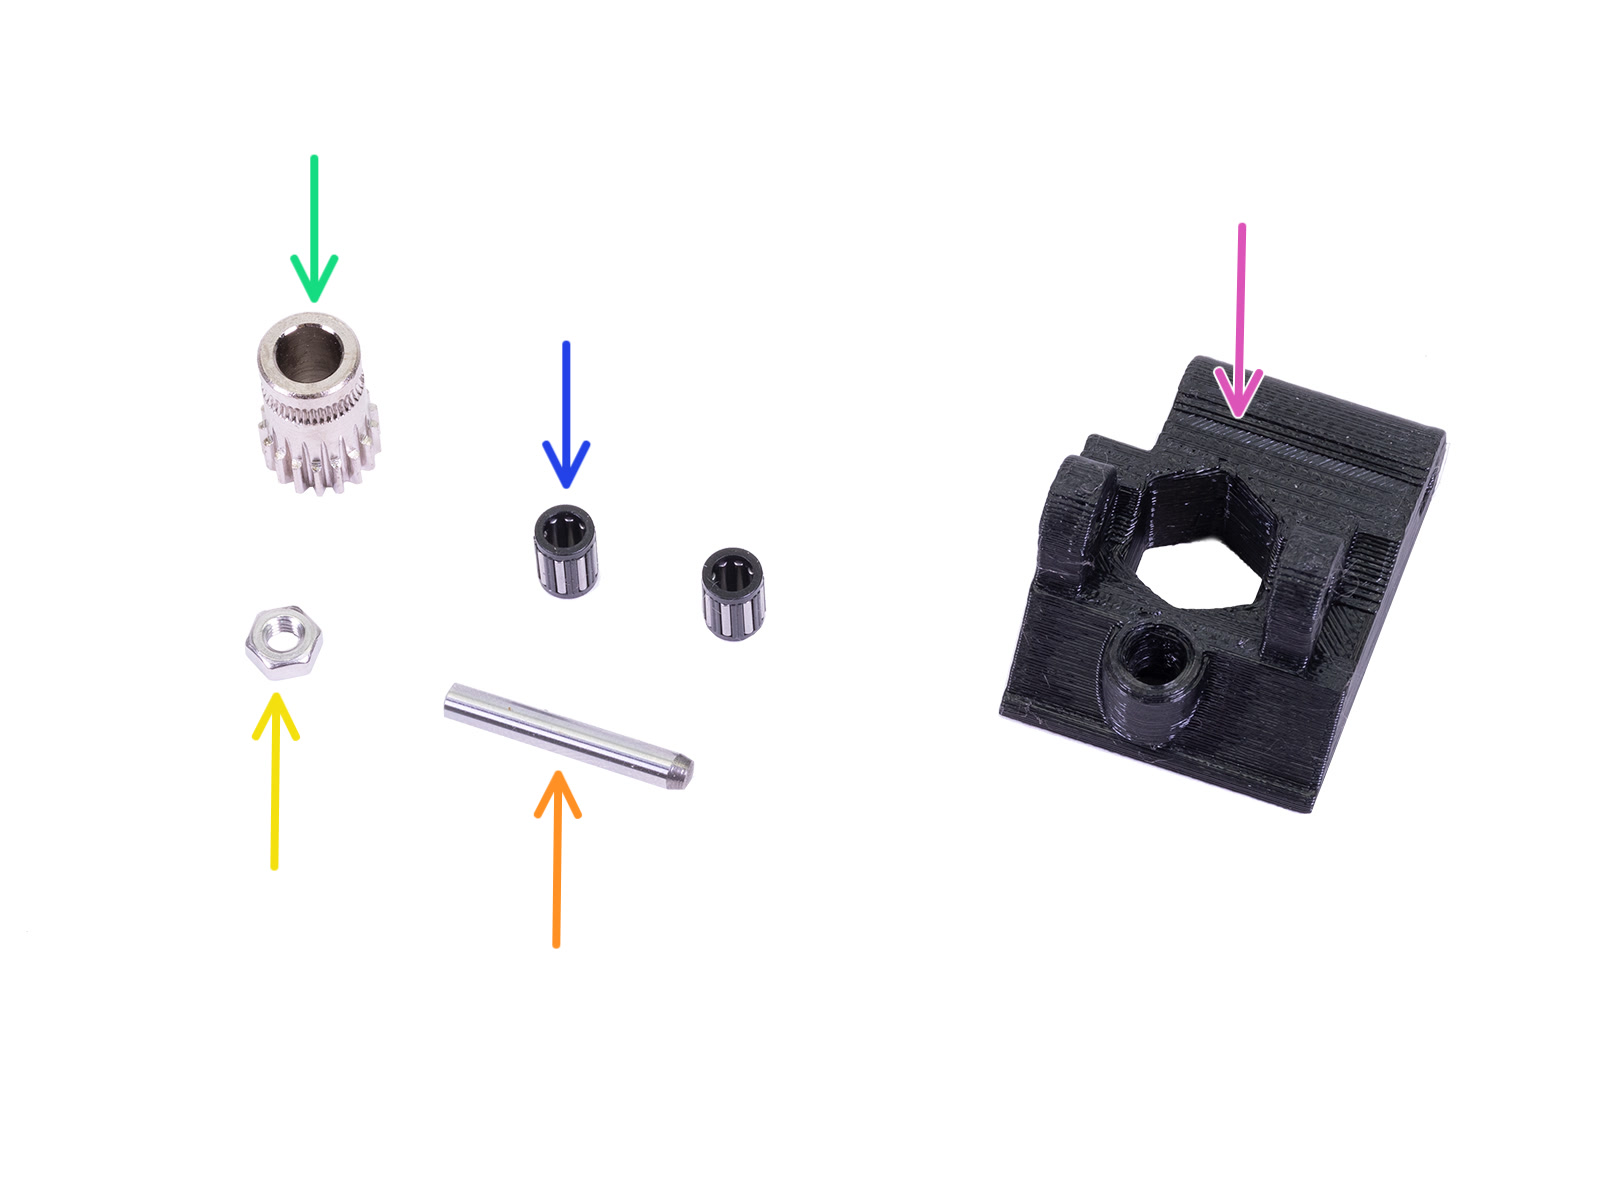 Extruder-idler parts preparation (both fan versions)